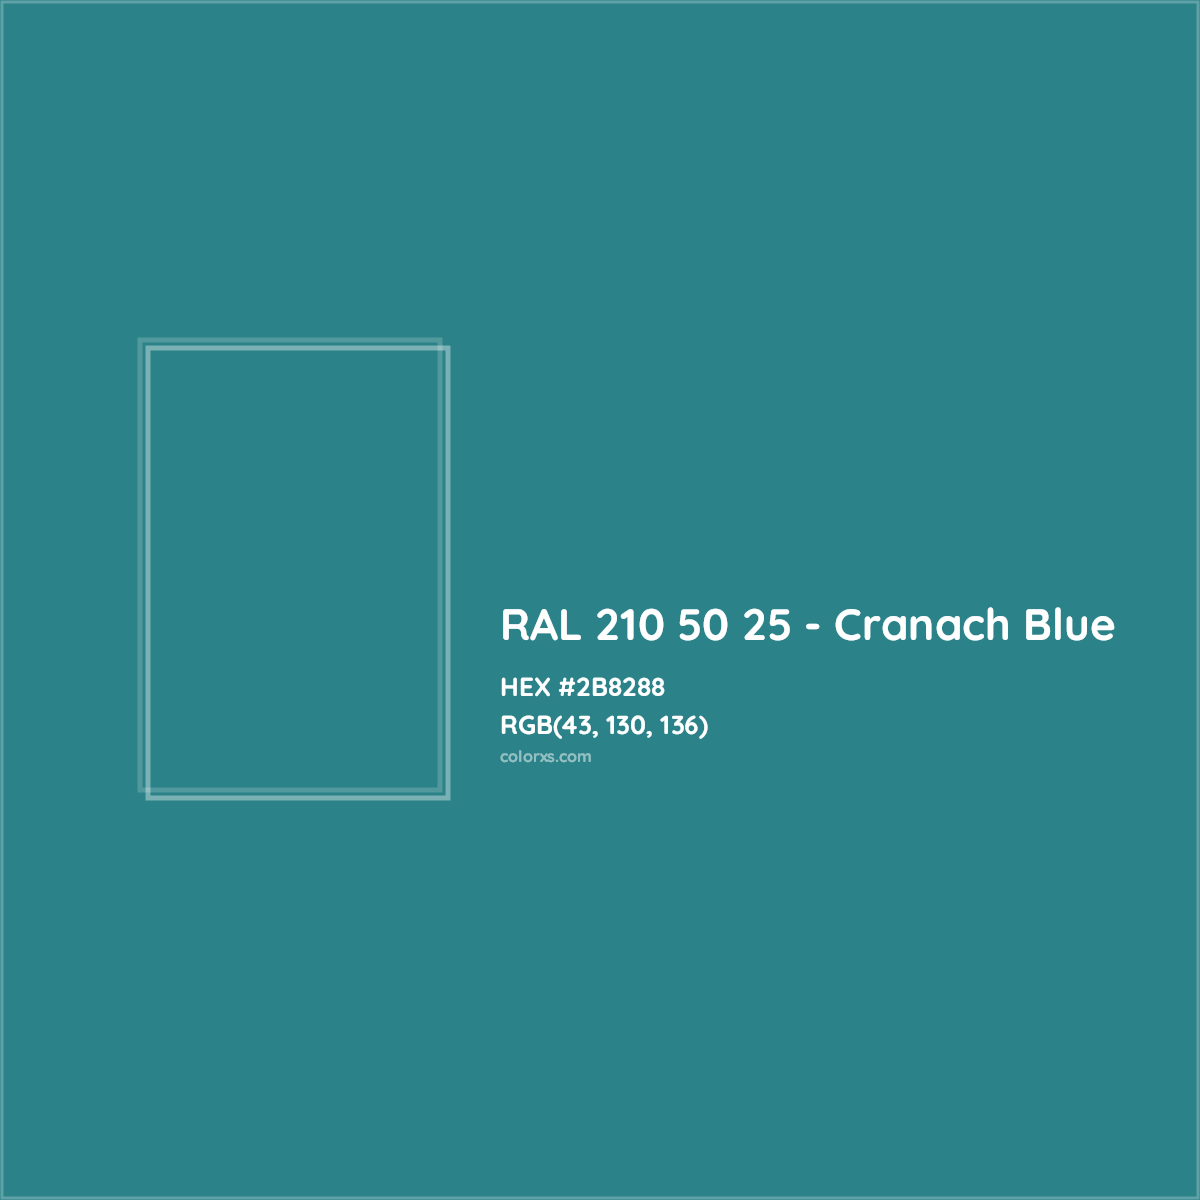 HEX #2B8288 RAL 210 50 25 - Cranach Blue CMS RAL Design - Color Code